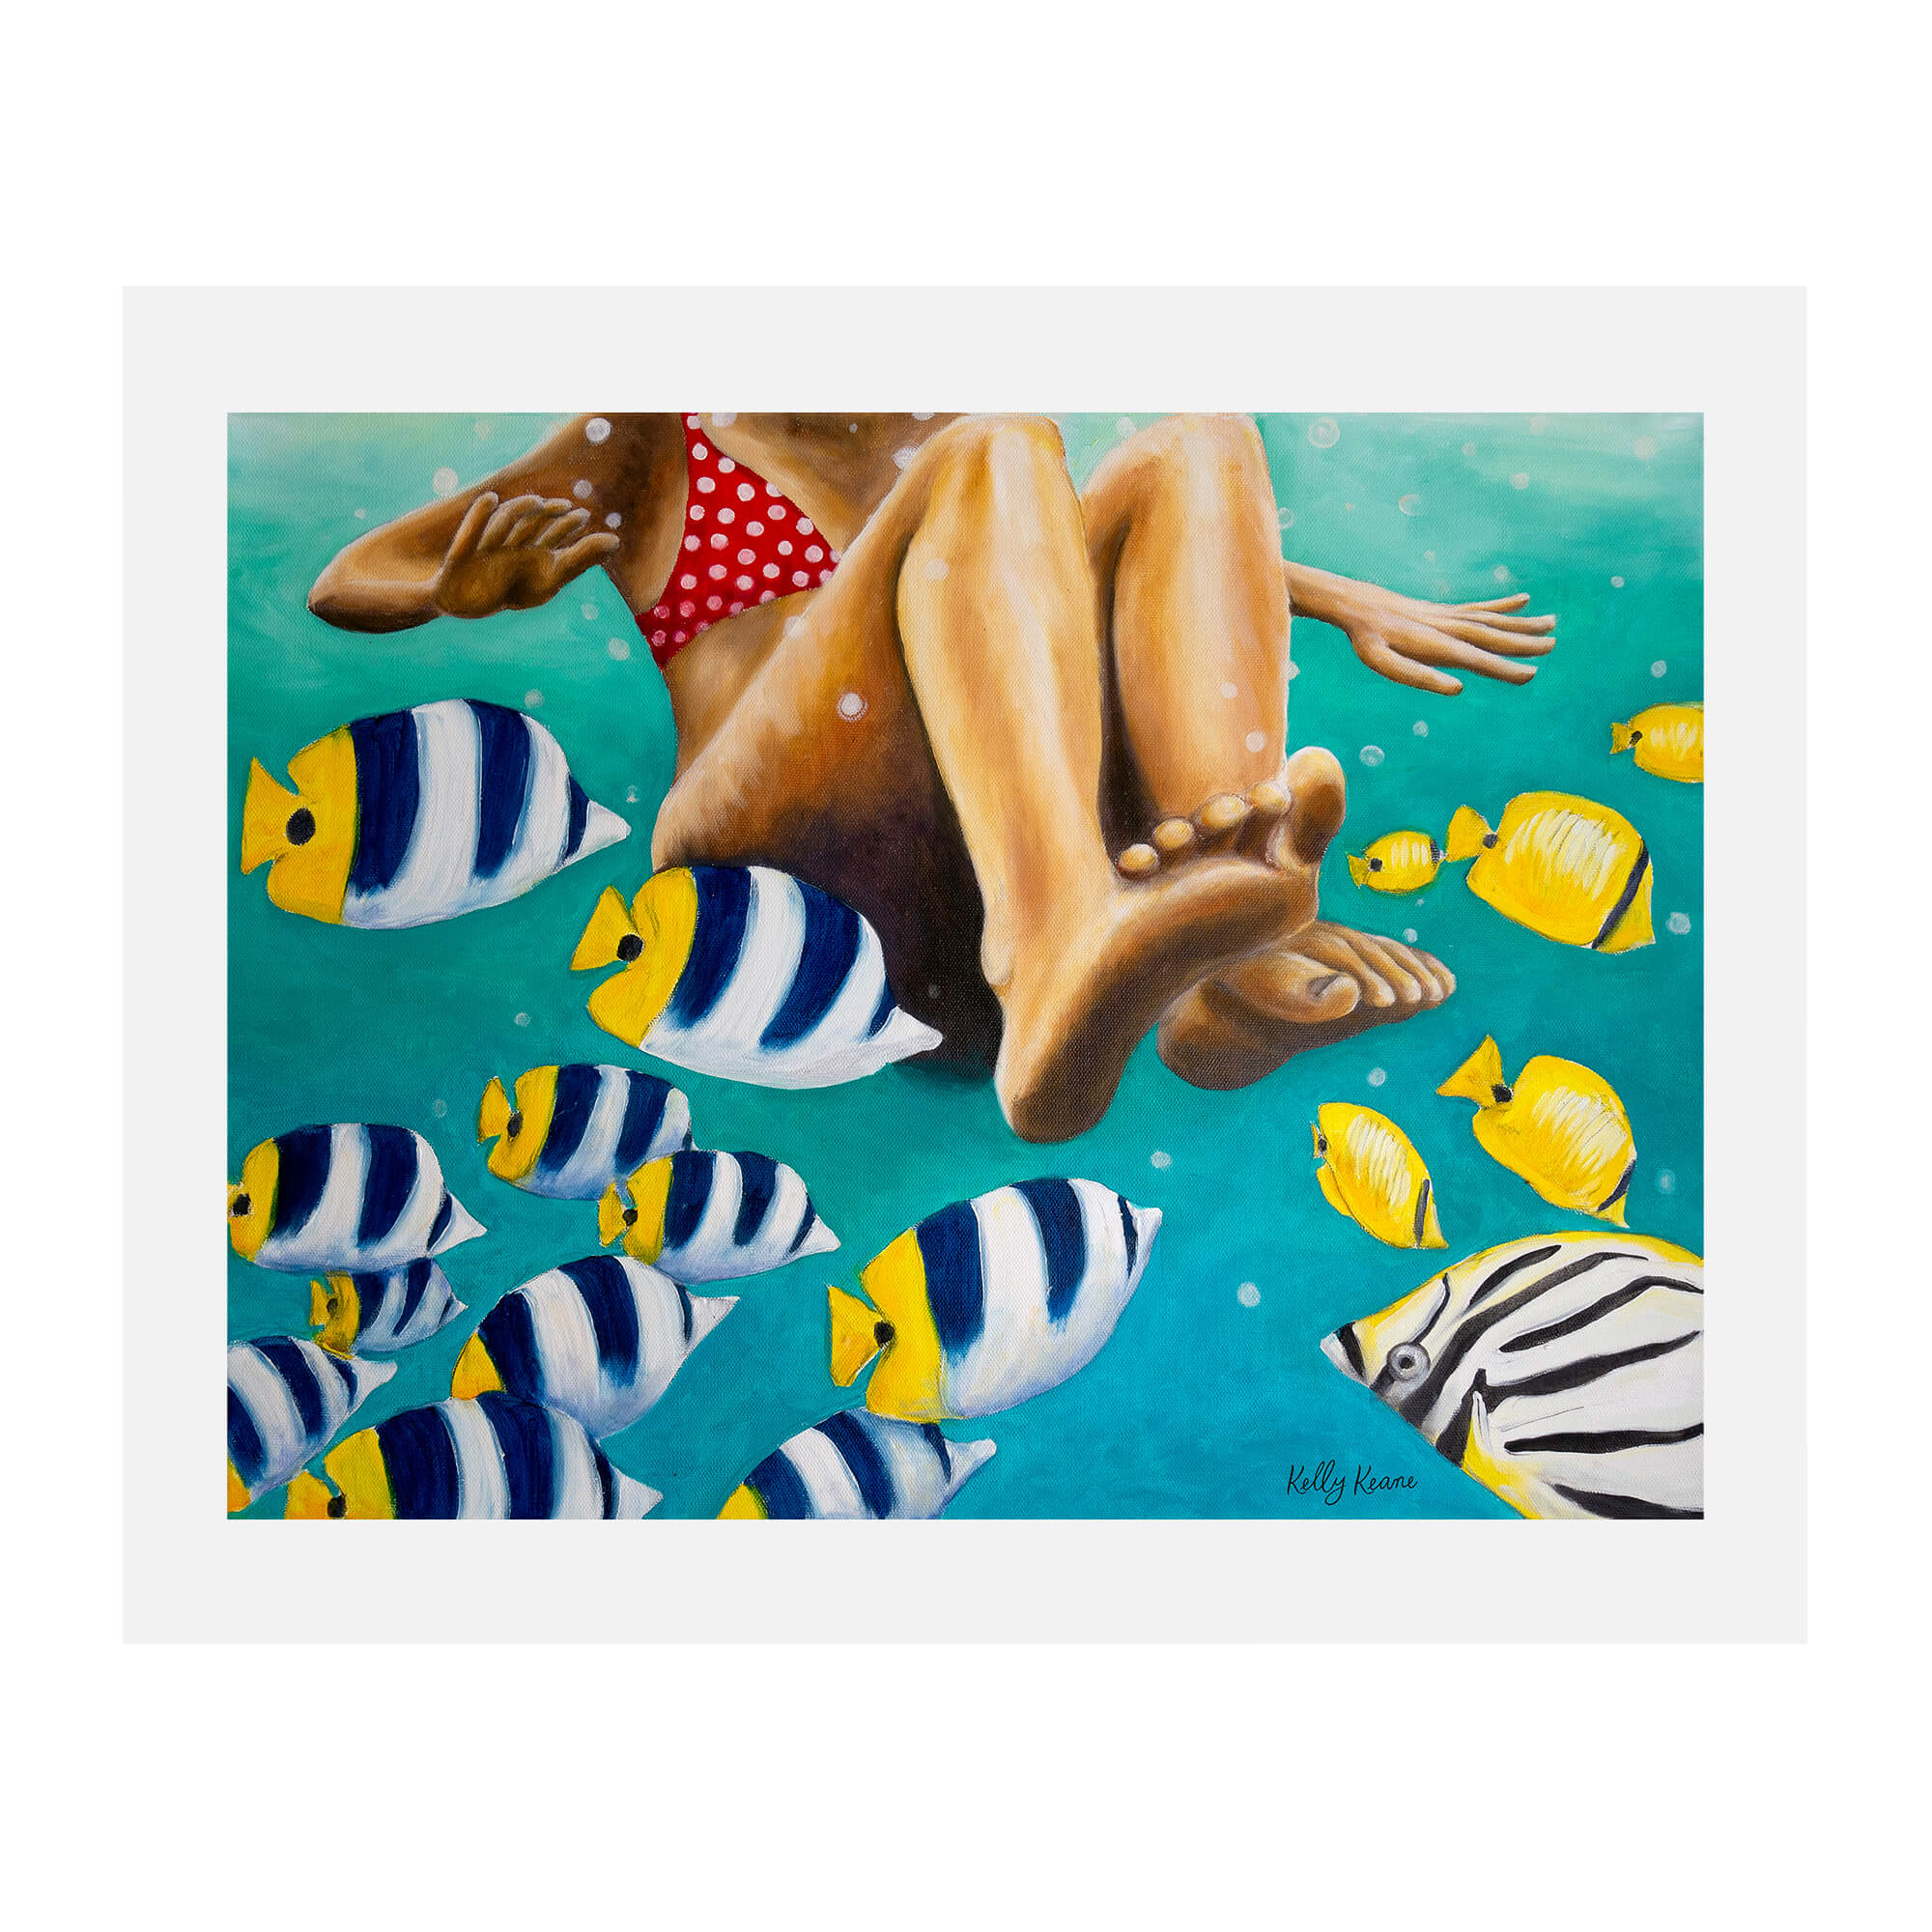 Paper art print featuring a woman swimming in deep water by hawaii artist Kelly Keane